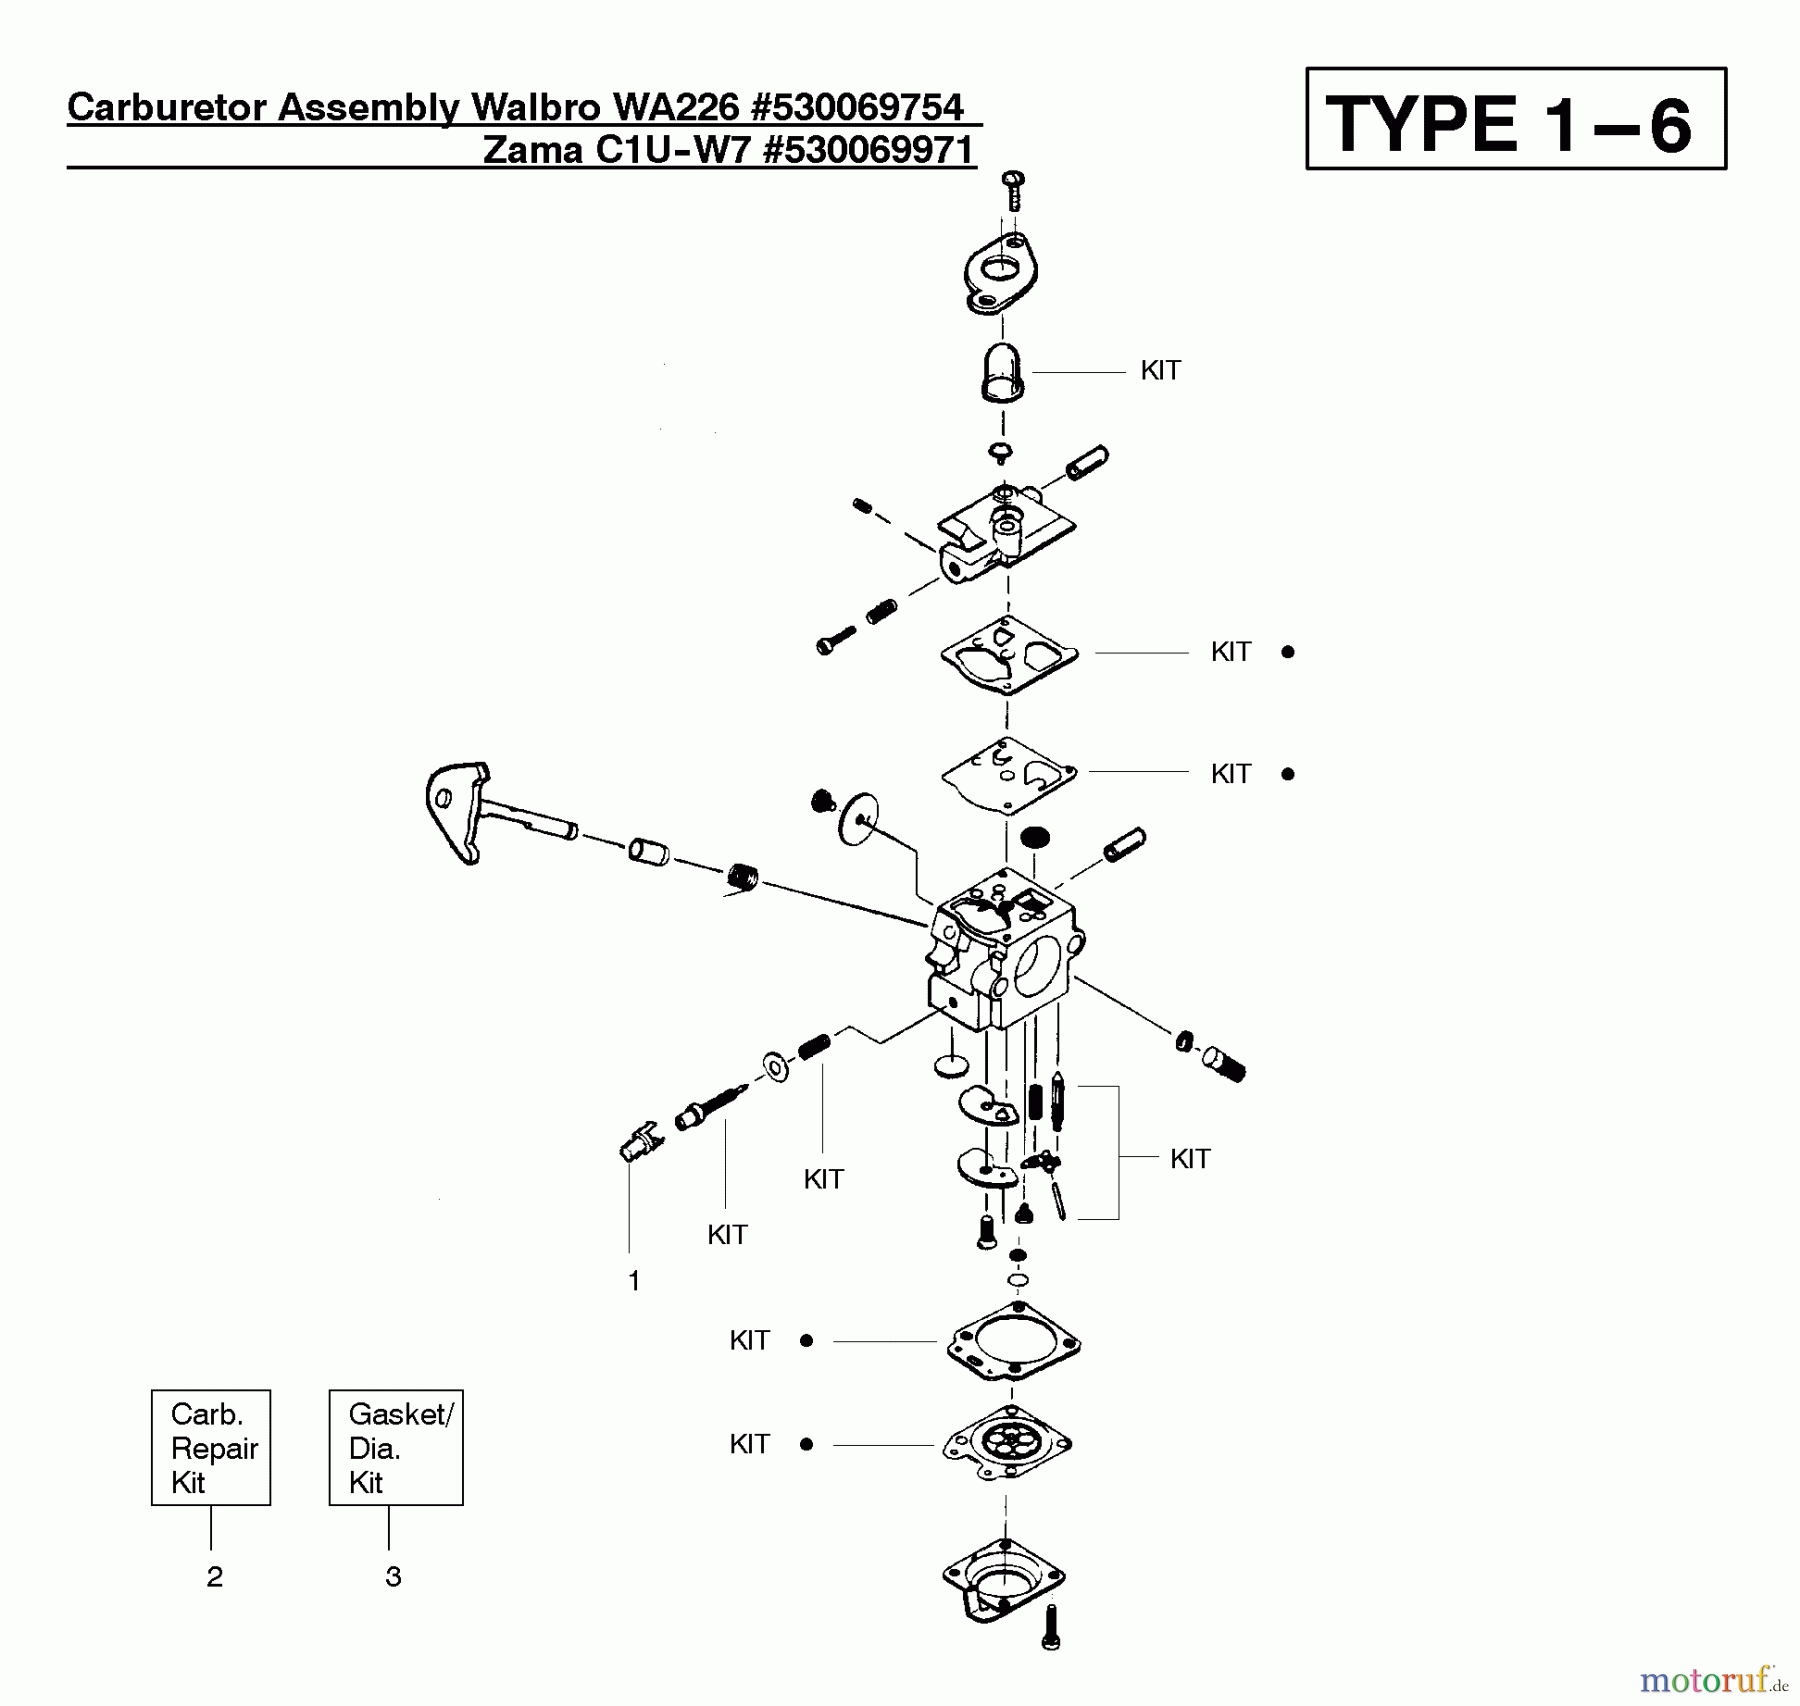  Poulan / Weed Eater Motorsensen, Trimmer XT600 (Type 4) - Weed Eater String Trimmer Carburetor Assembly (WT226) 530069754, (Zama C1U-W7) 530069971